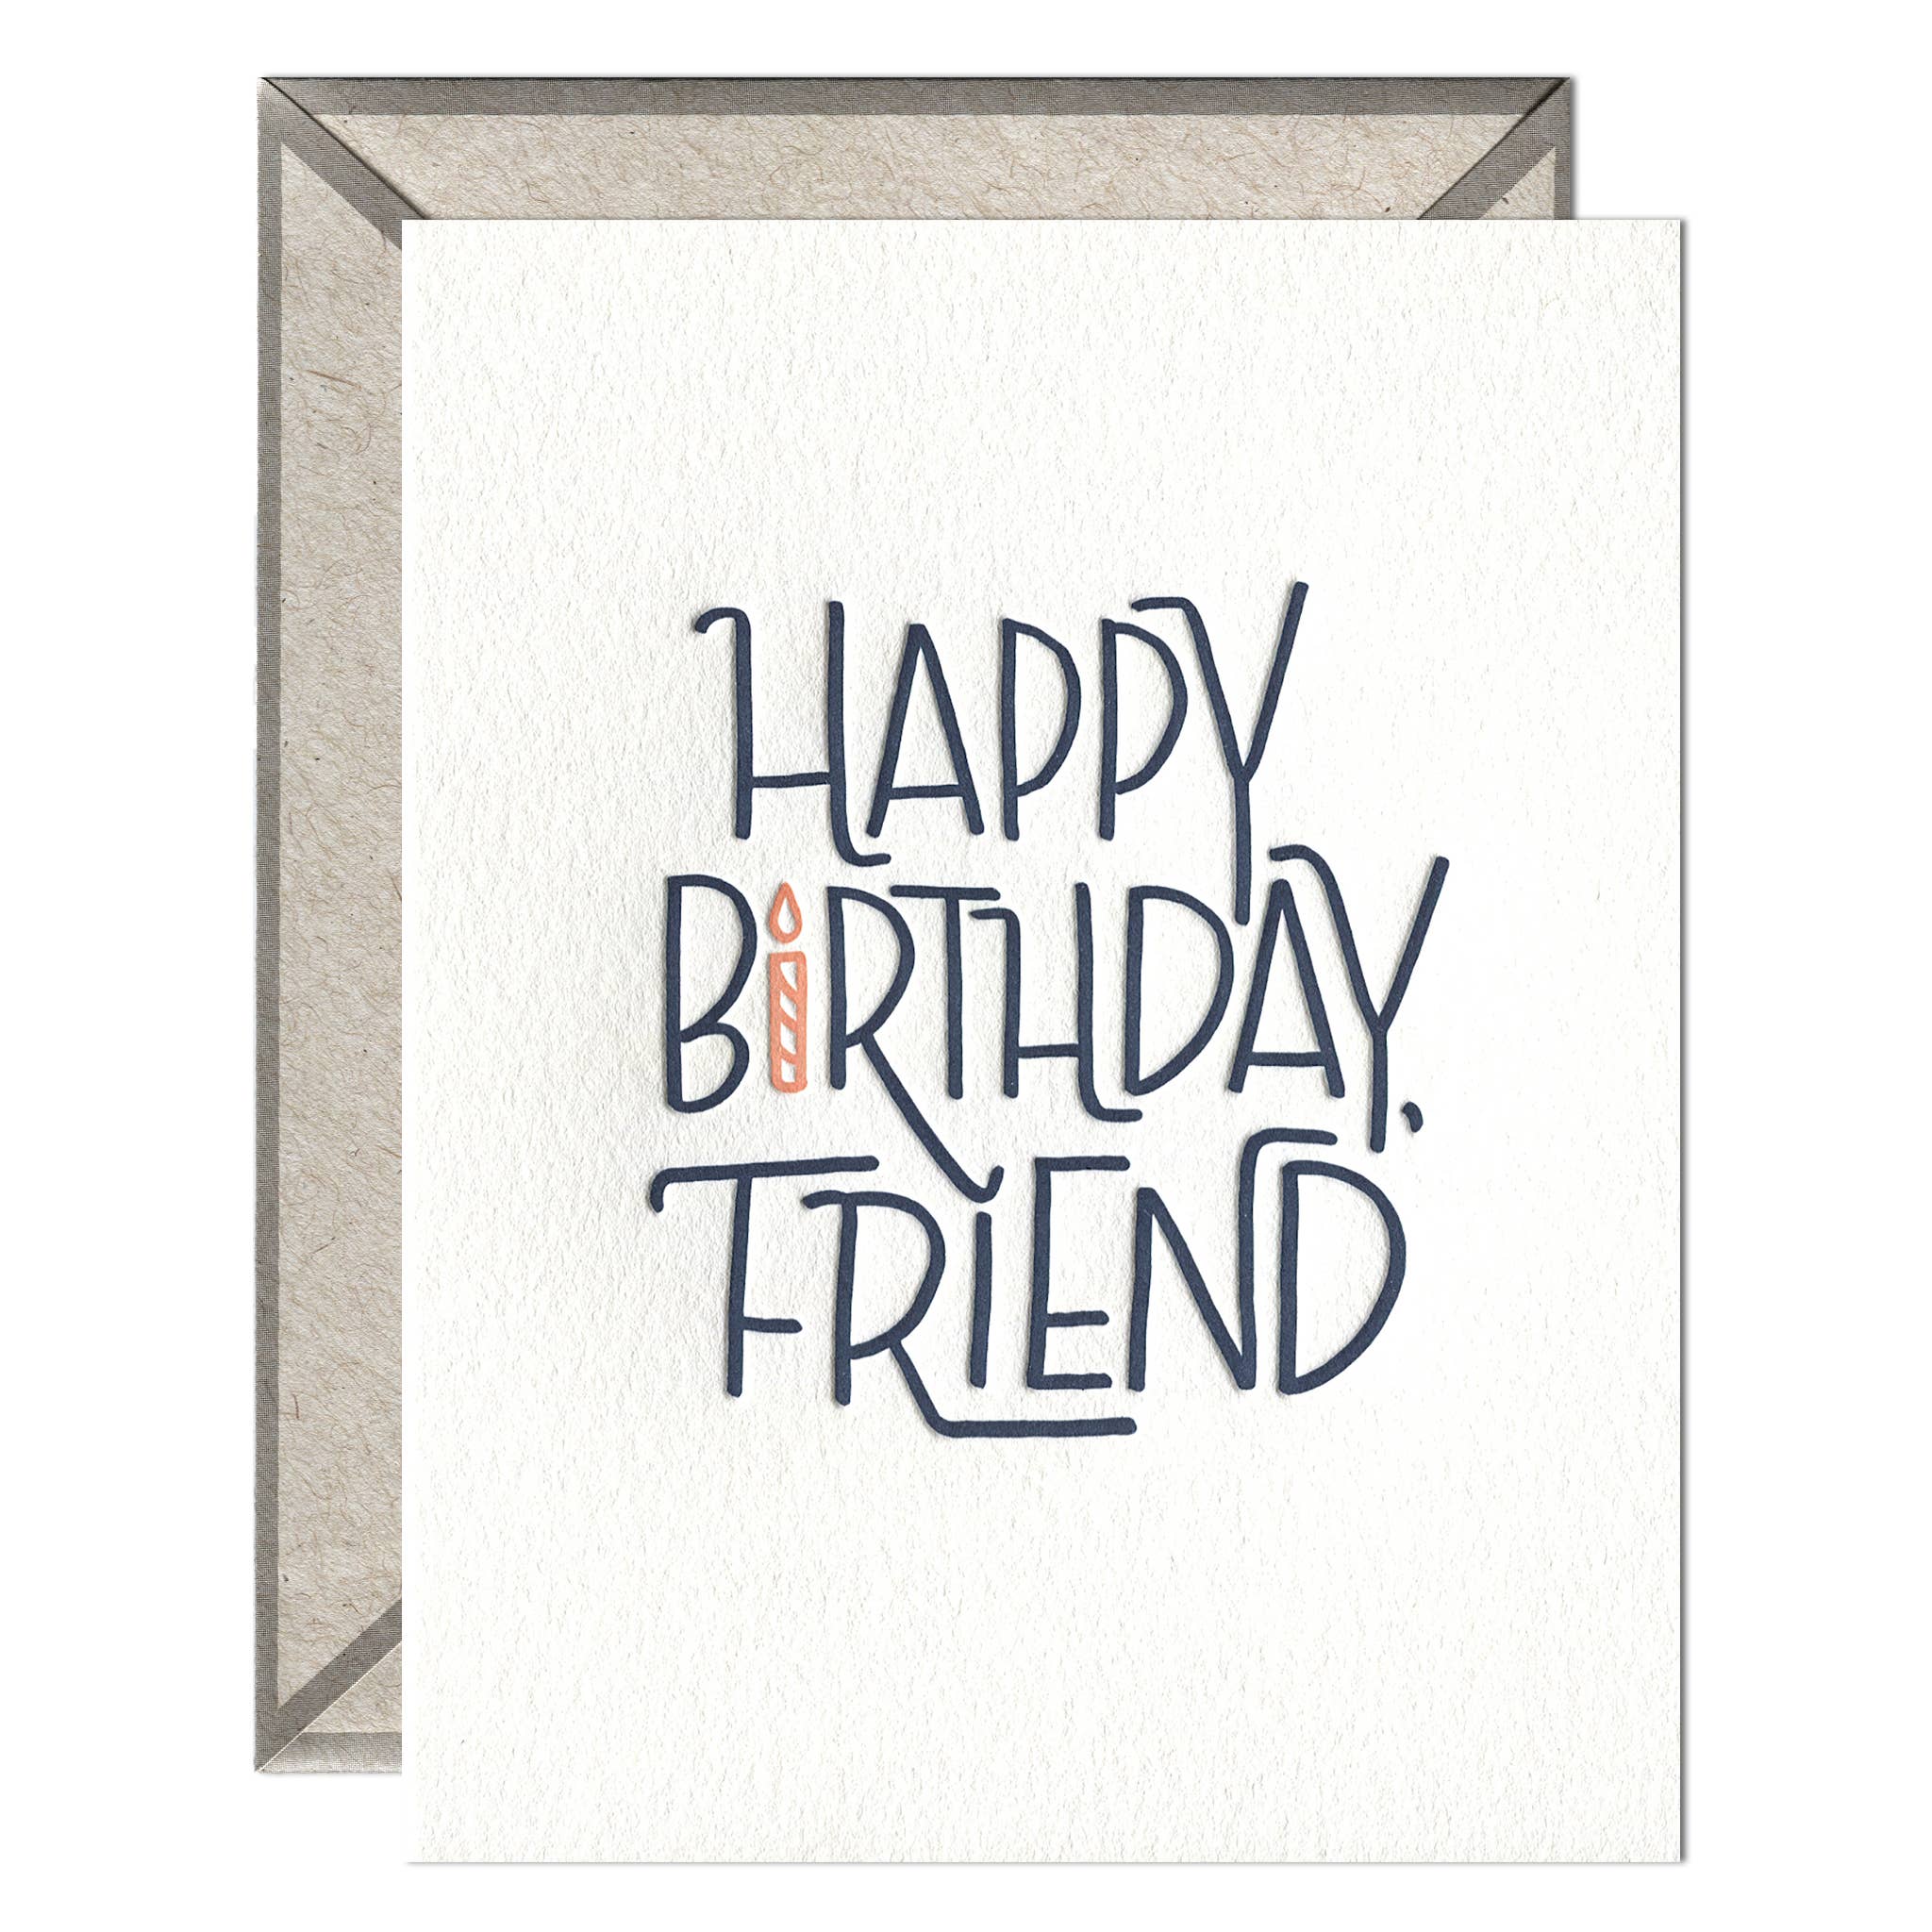 Happy Birthday, Friend - Birthday card